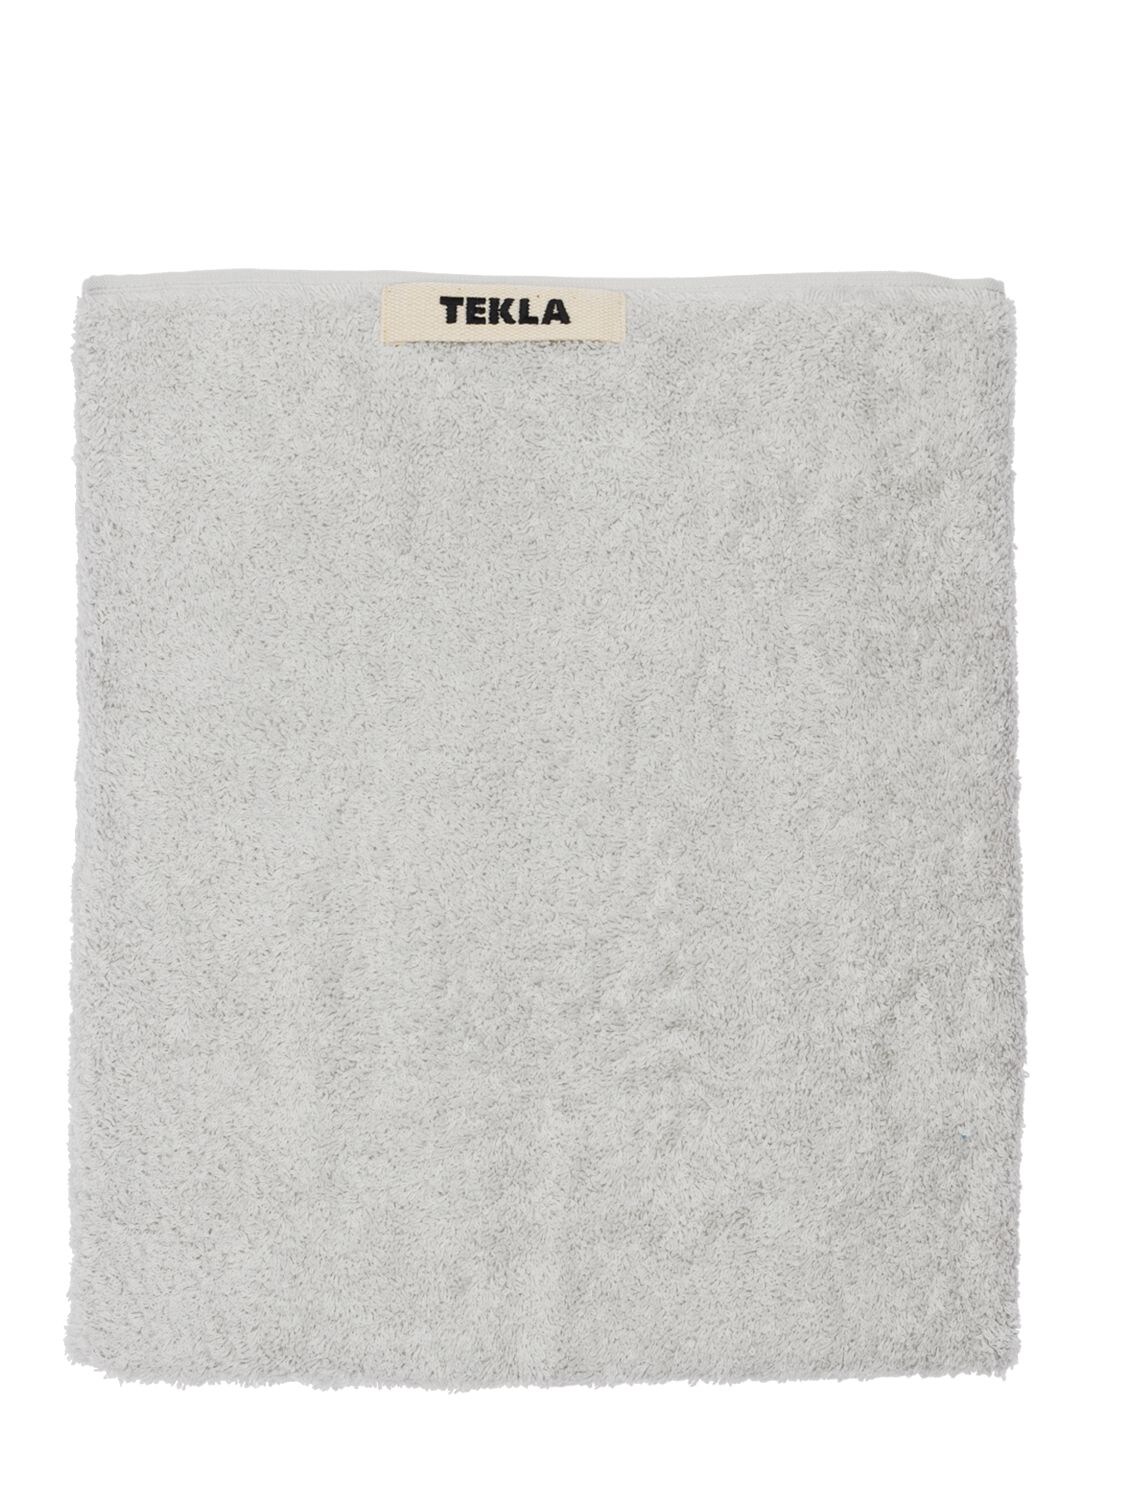 TEKLA Towels | ModeSens